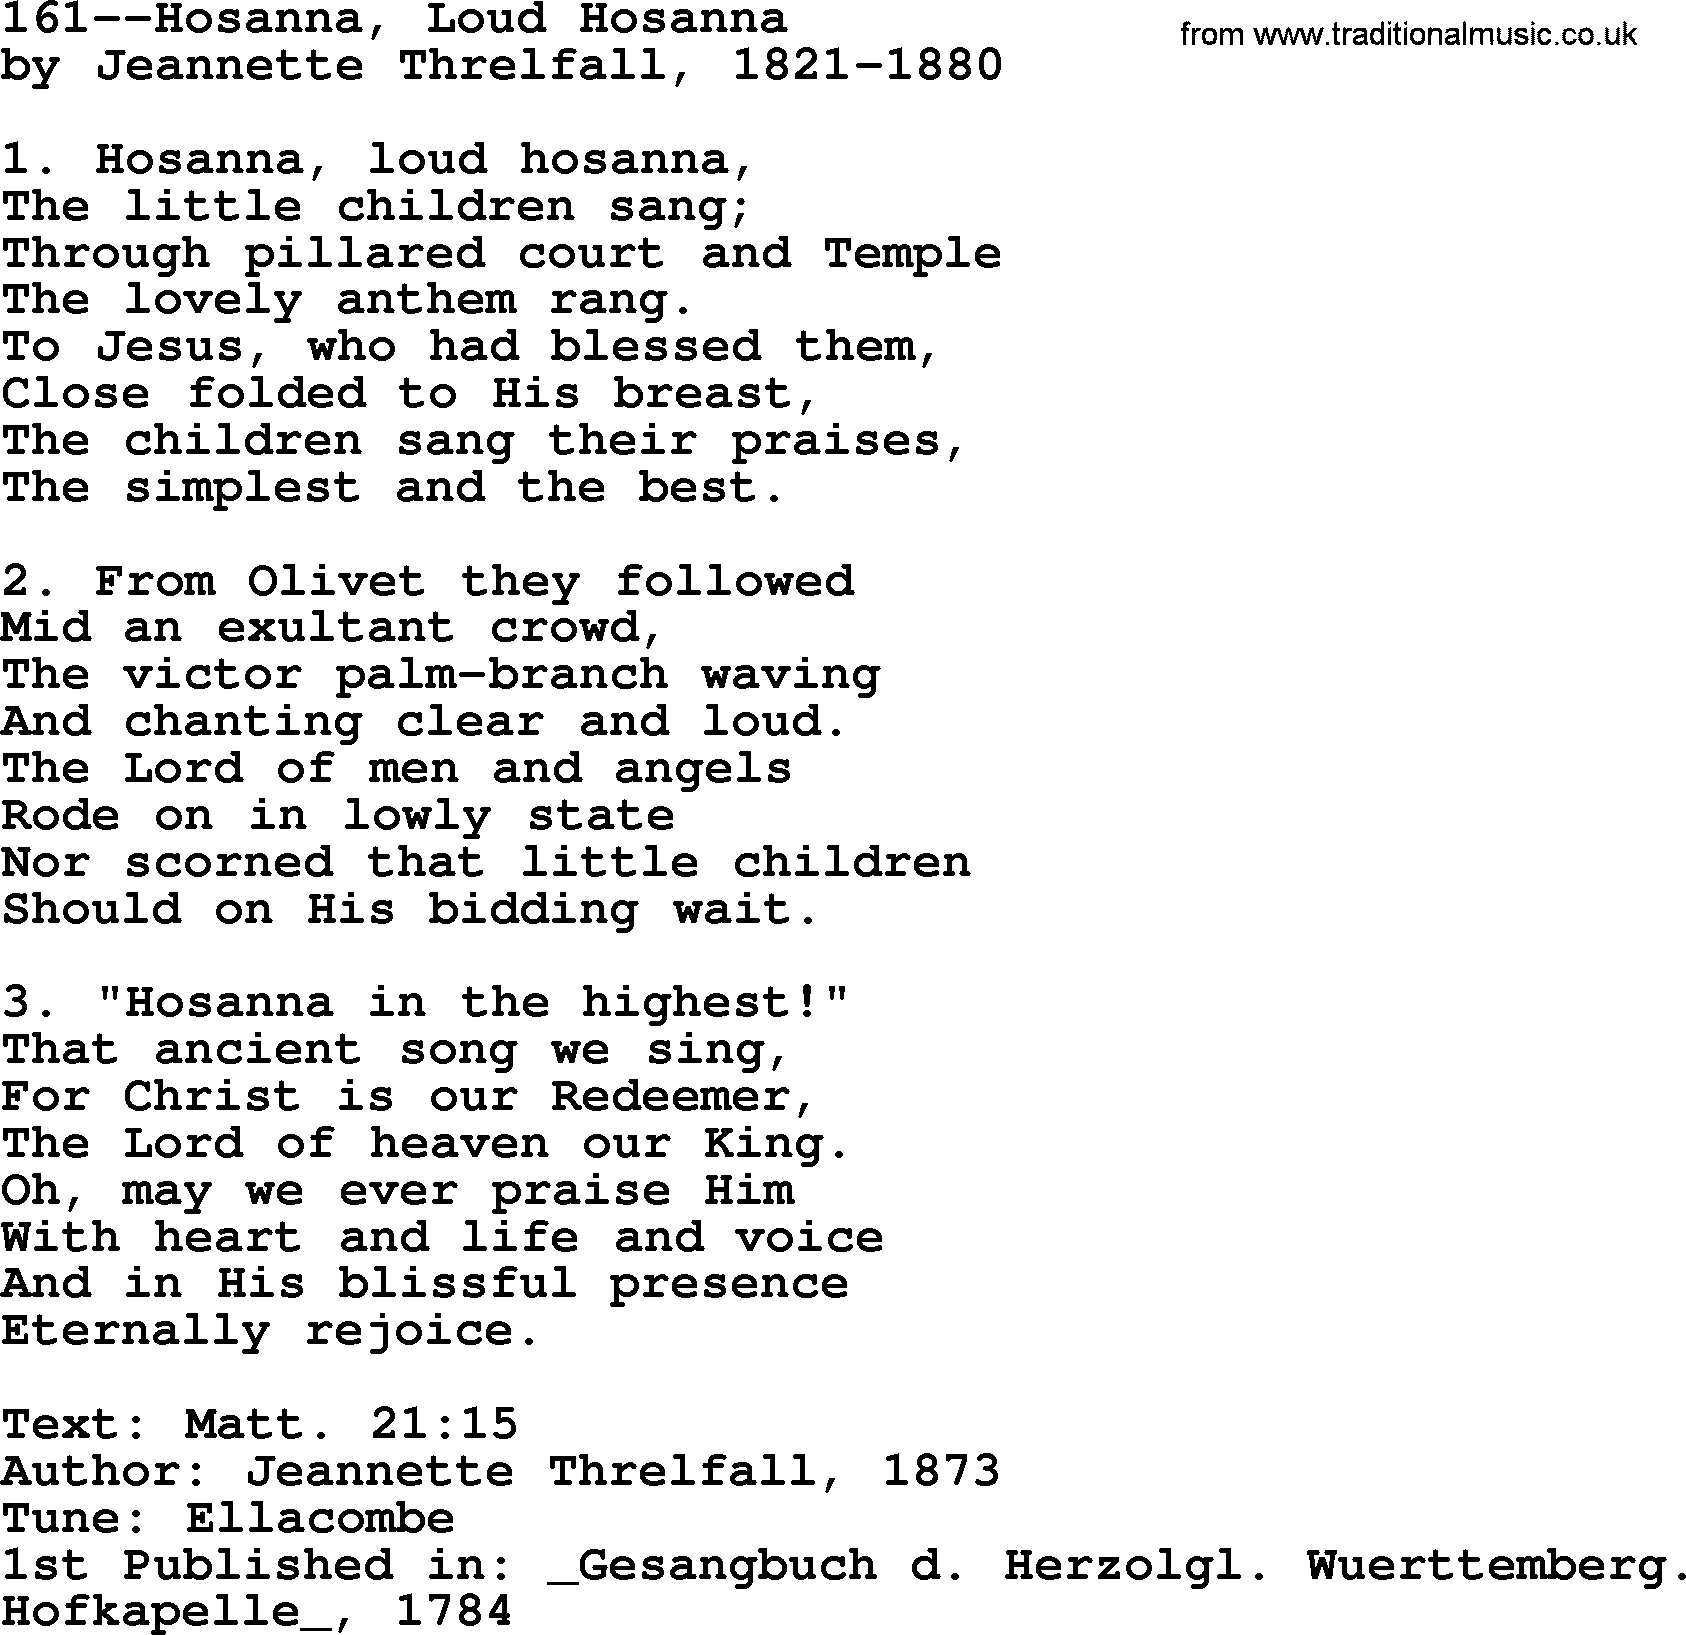 Lutheran Hymn: 161--Hosanna, Loud Hosanna.txt lyrics with PDF